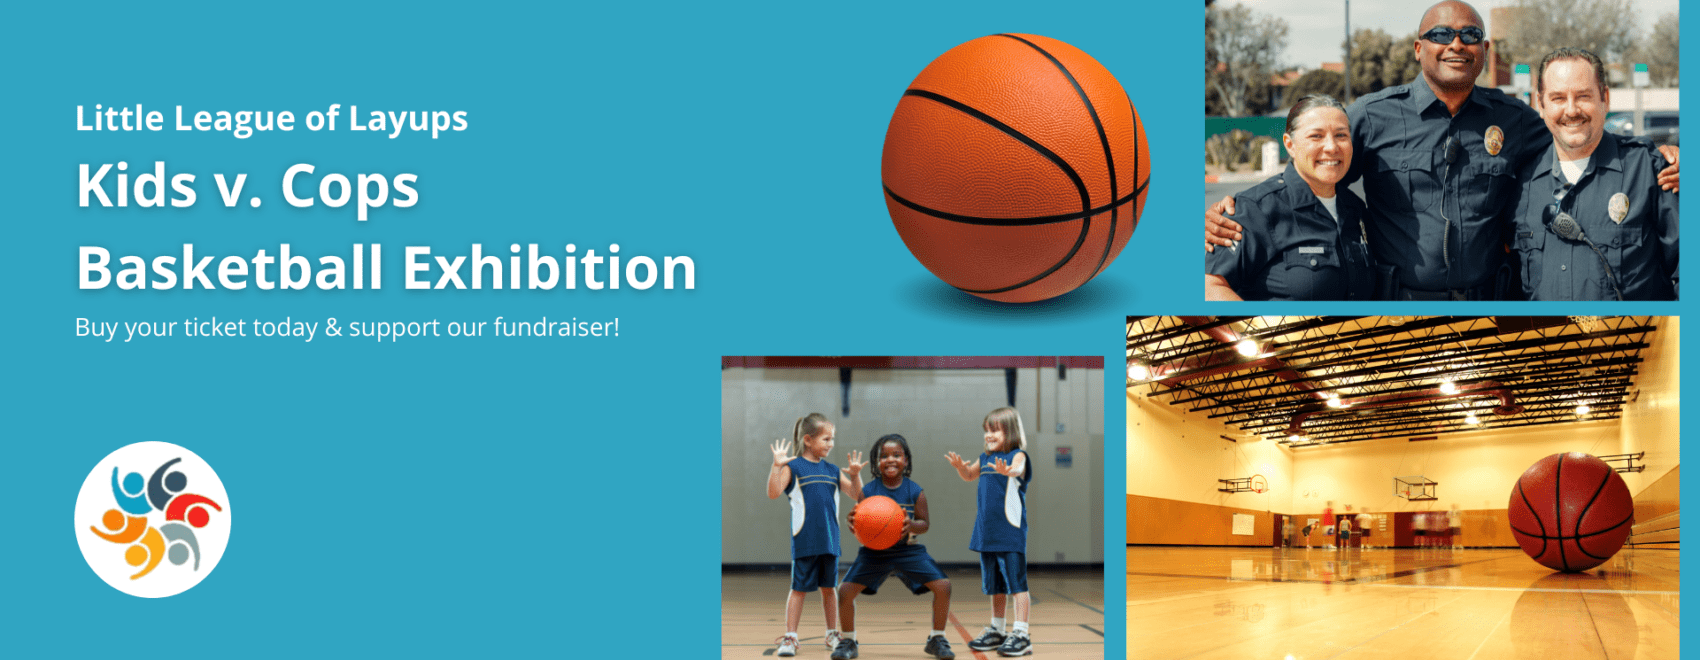 Kids v. Cops Basketball Exhibition